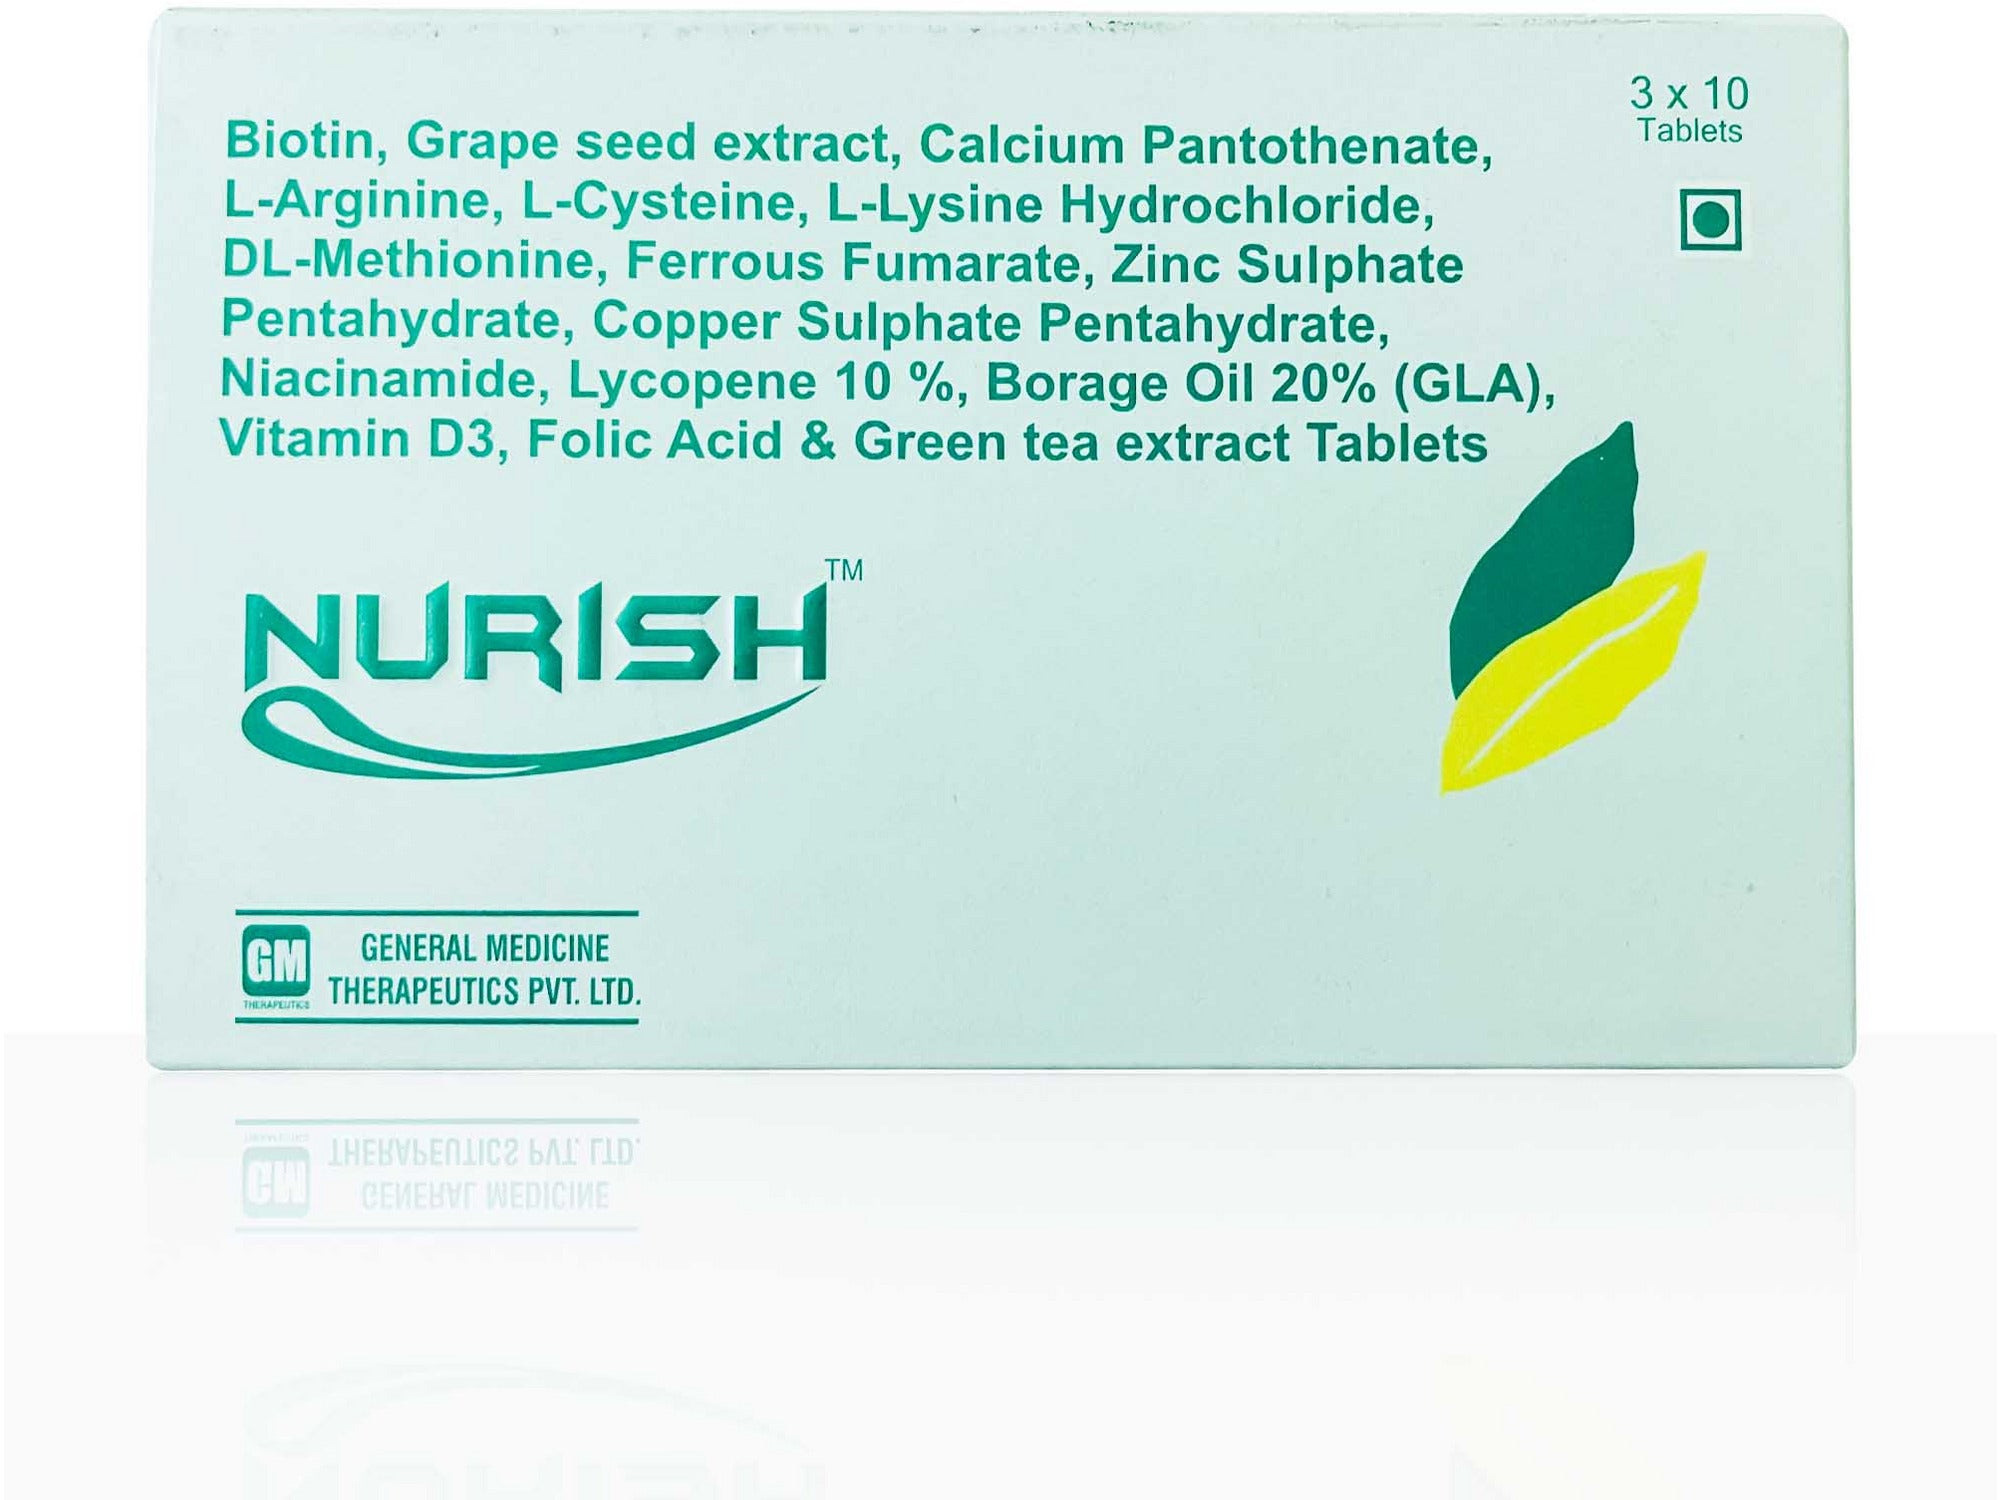 Nurish Tablet - Clinikally